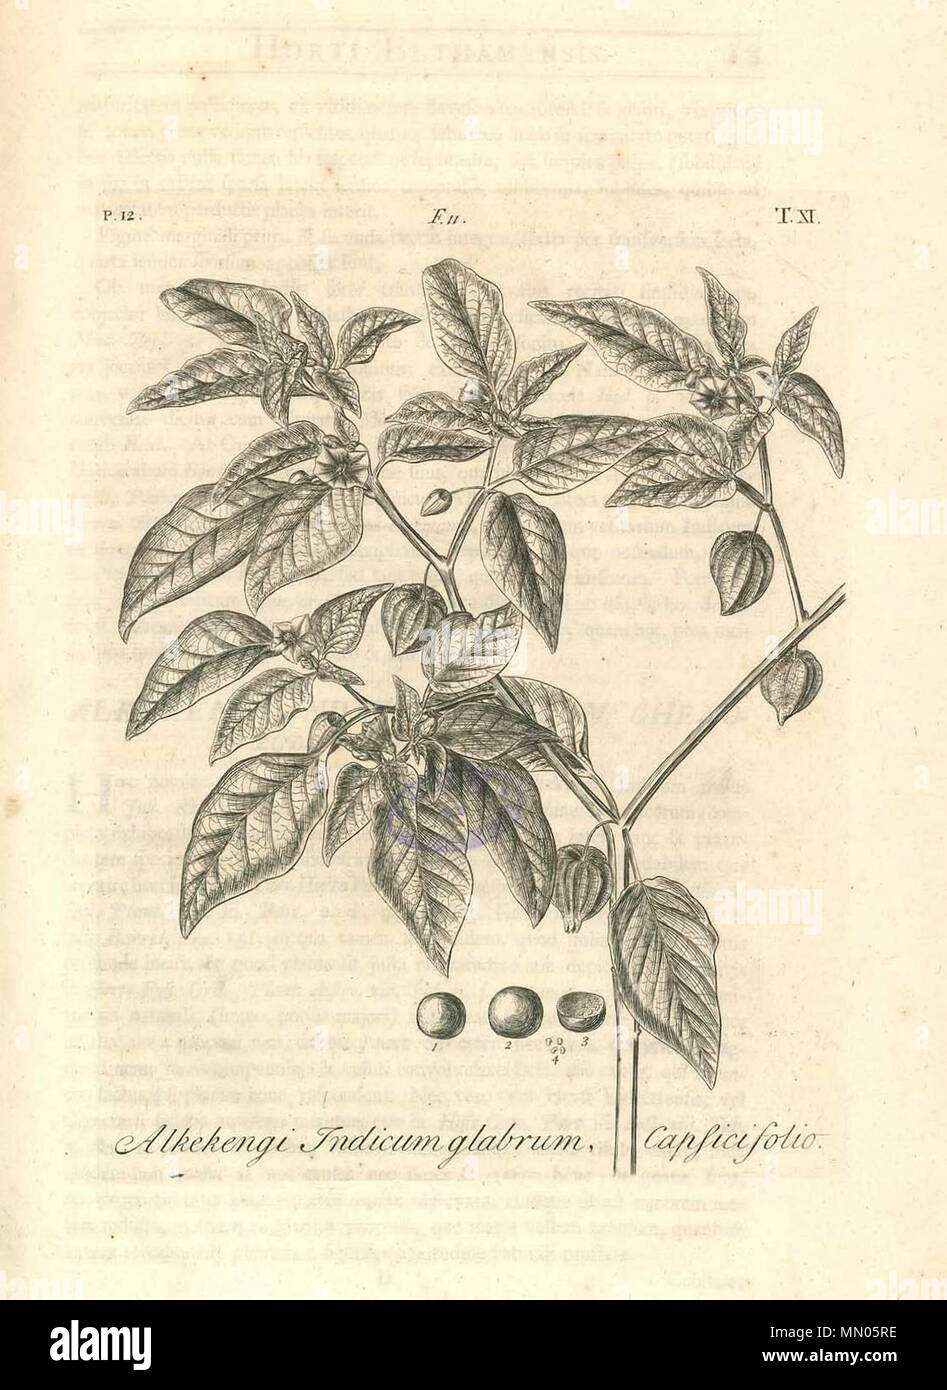 . English: Dillenius, J.J. (1732), Hortus Elthamensis plate 9, depicting Alkekengi Indicum glabrum, Capsicifolio, now know as Physalis angulata L. Nederlands: Dillenius, J.J. (1732), Hortus Elthamensis plaat 9, met een afbeelding van Alkekengi Indicum glabrum, Capsicifolio, nu bekend als Physalis angulata L. Deutsch: Dillenius, J.J. (1732), Hortus Elthamensis Tafel 9, mit einer Darstellung von Alkekengi Indicum glabrum, Capsicifolio, jetzt bekannt als Physalis angulata L. Français : Dillenius, J.J. (1732), Hortus Elthamensis lame 9, représentant Alkekengi Indicum glabrum, Capsicifolio, à prése Stock Photo